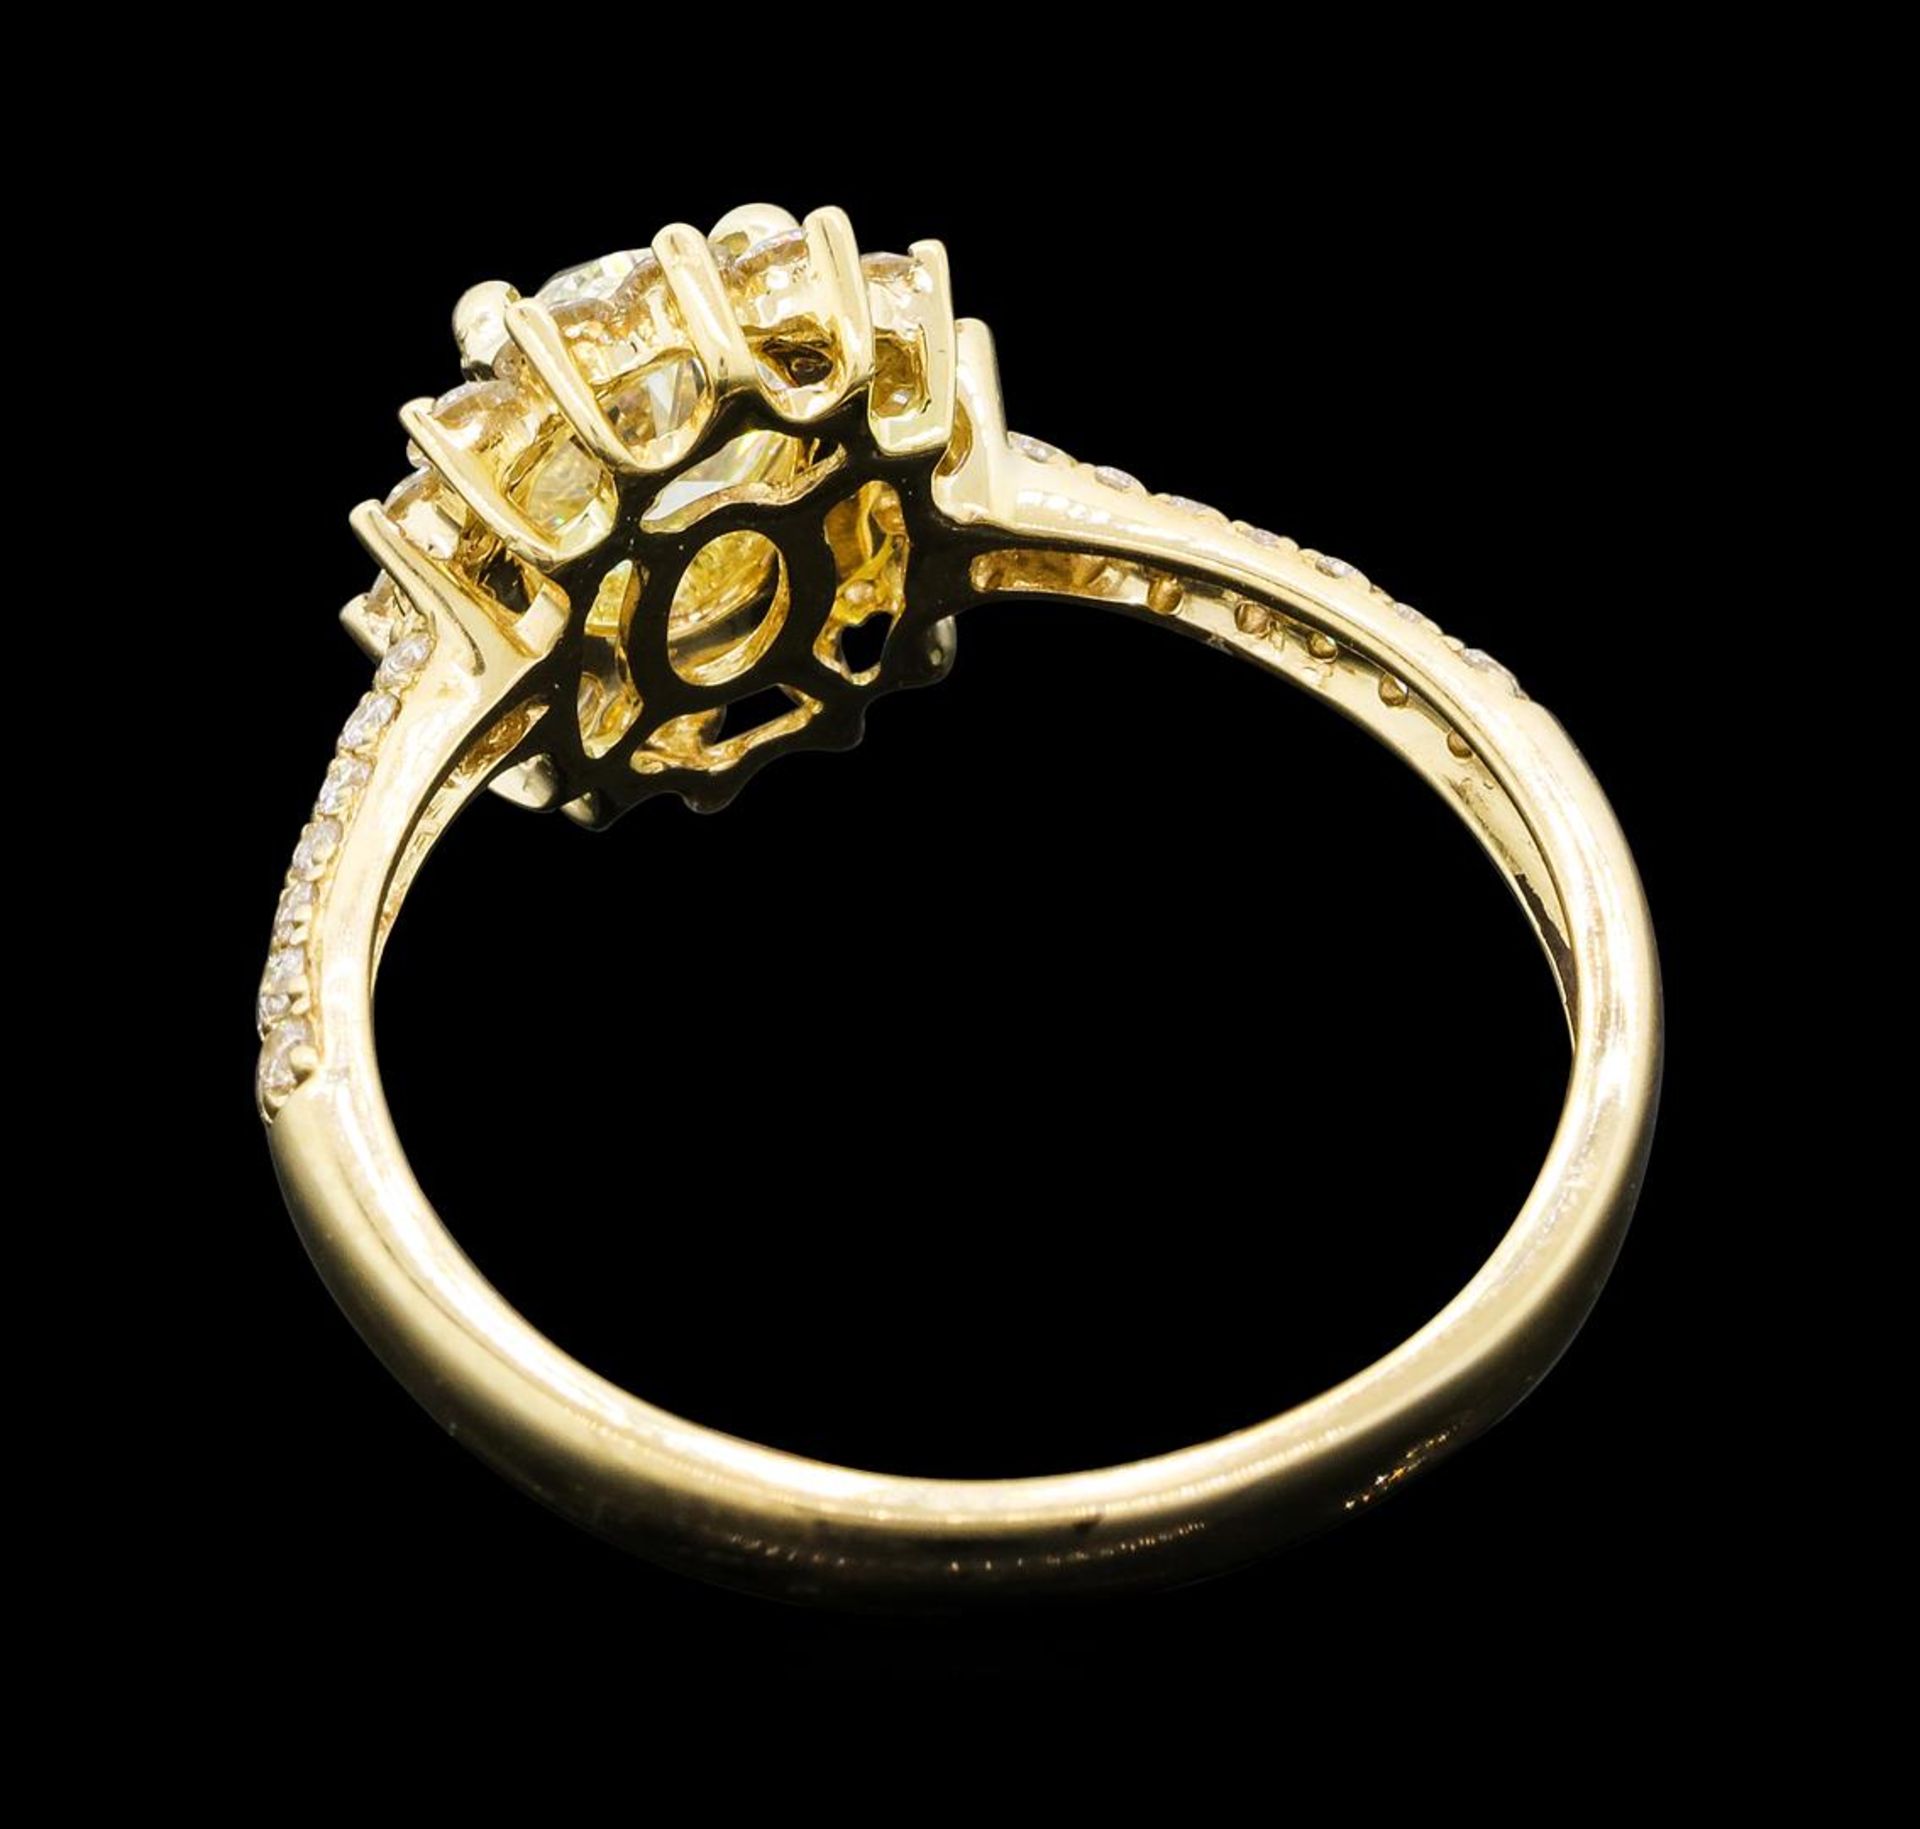 1.20 ctw Diamond Ring - 14KT Yellow Gold - Image 3 of 5